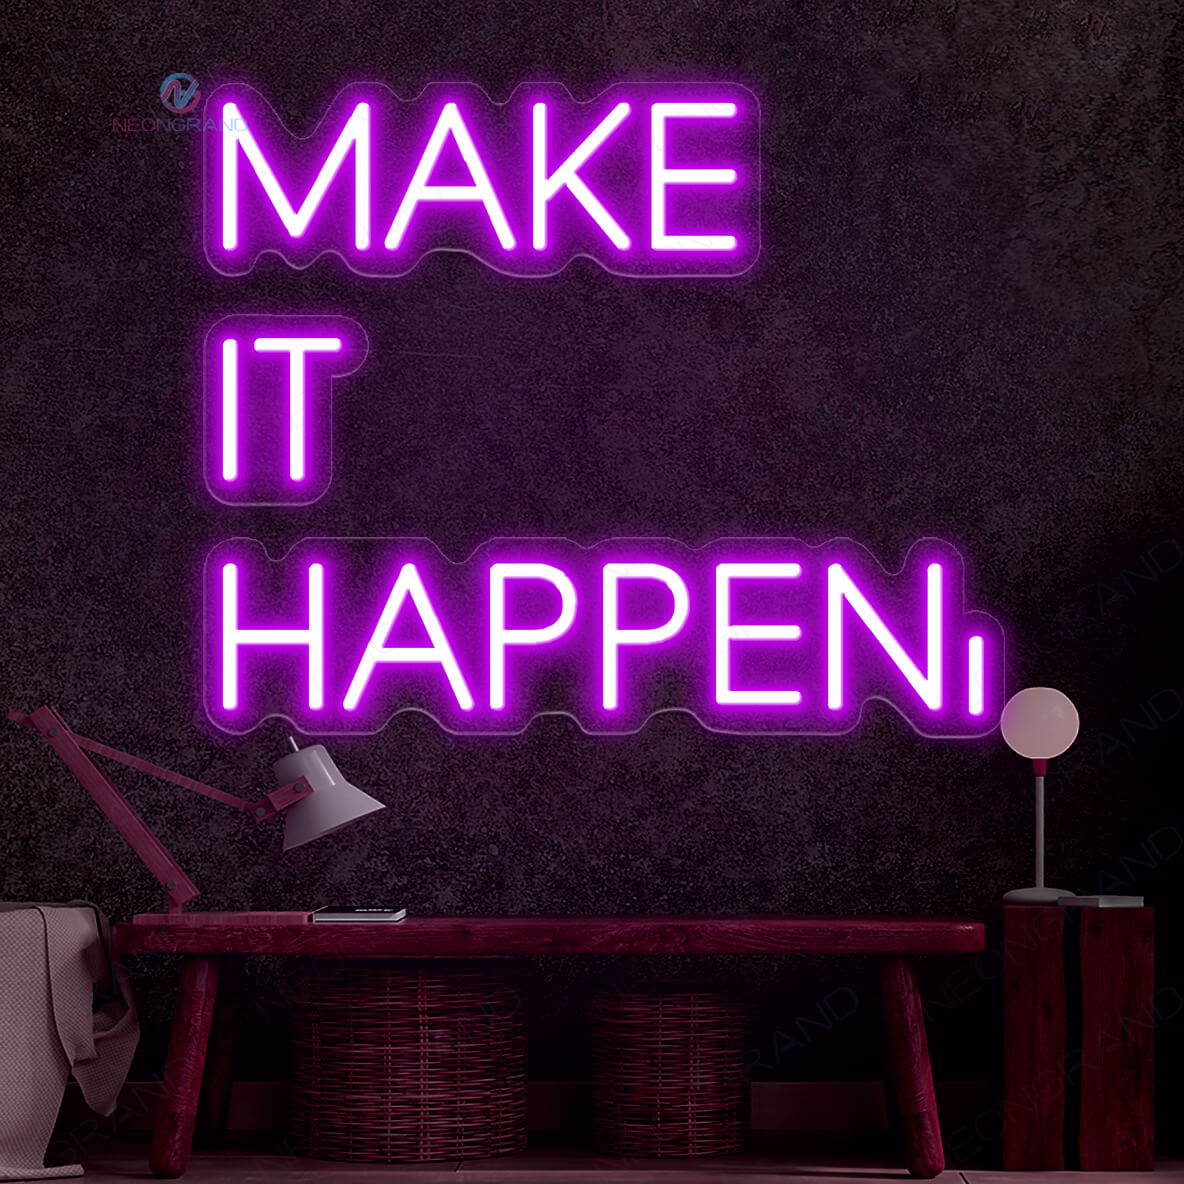 Make It Happen Neon Sign Inspirational Led Light purple